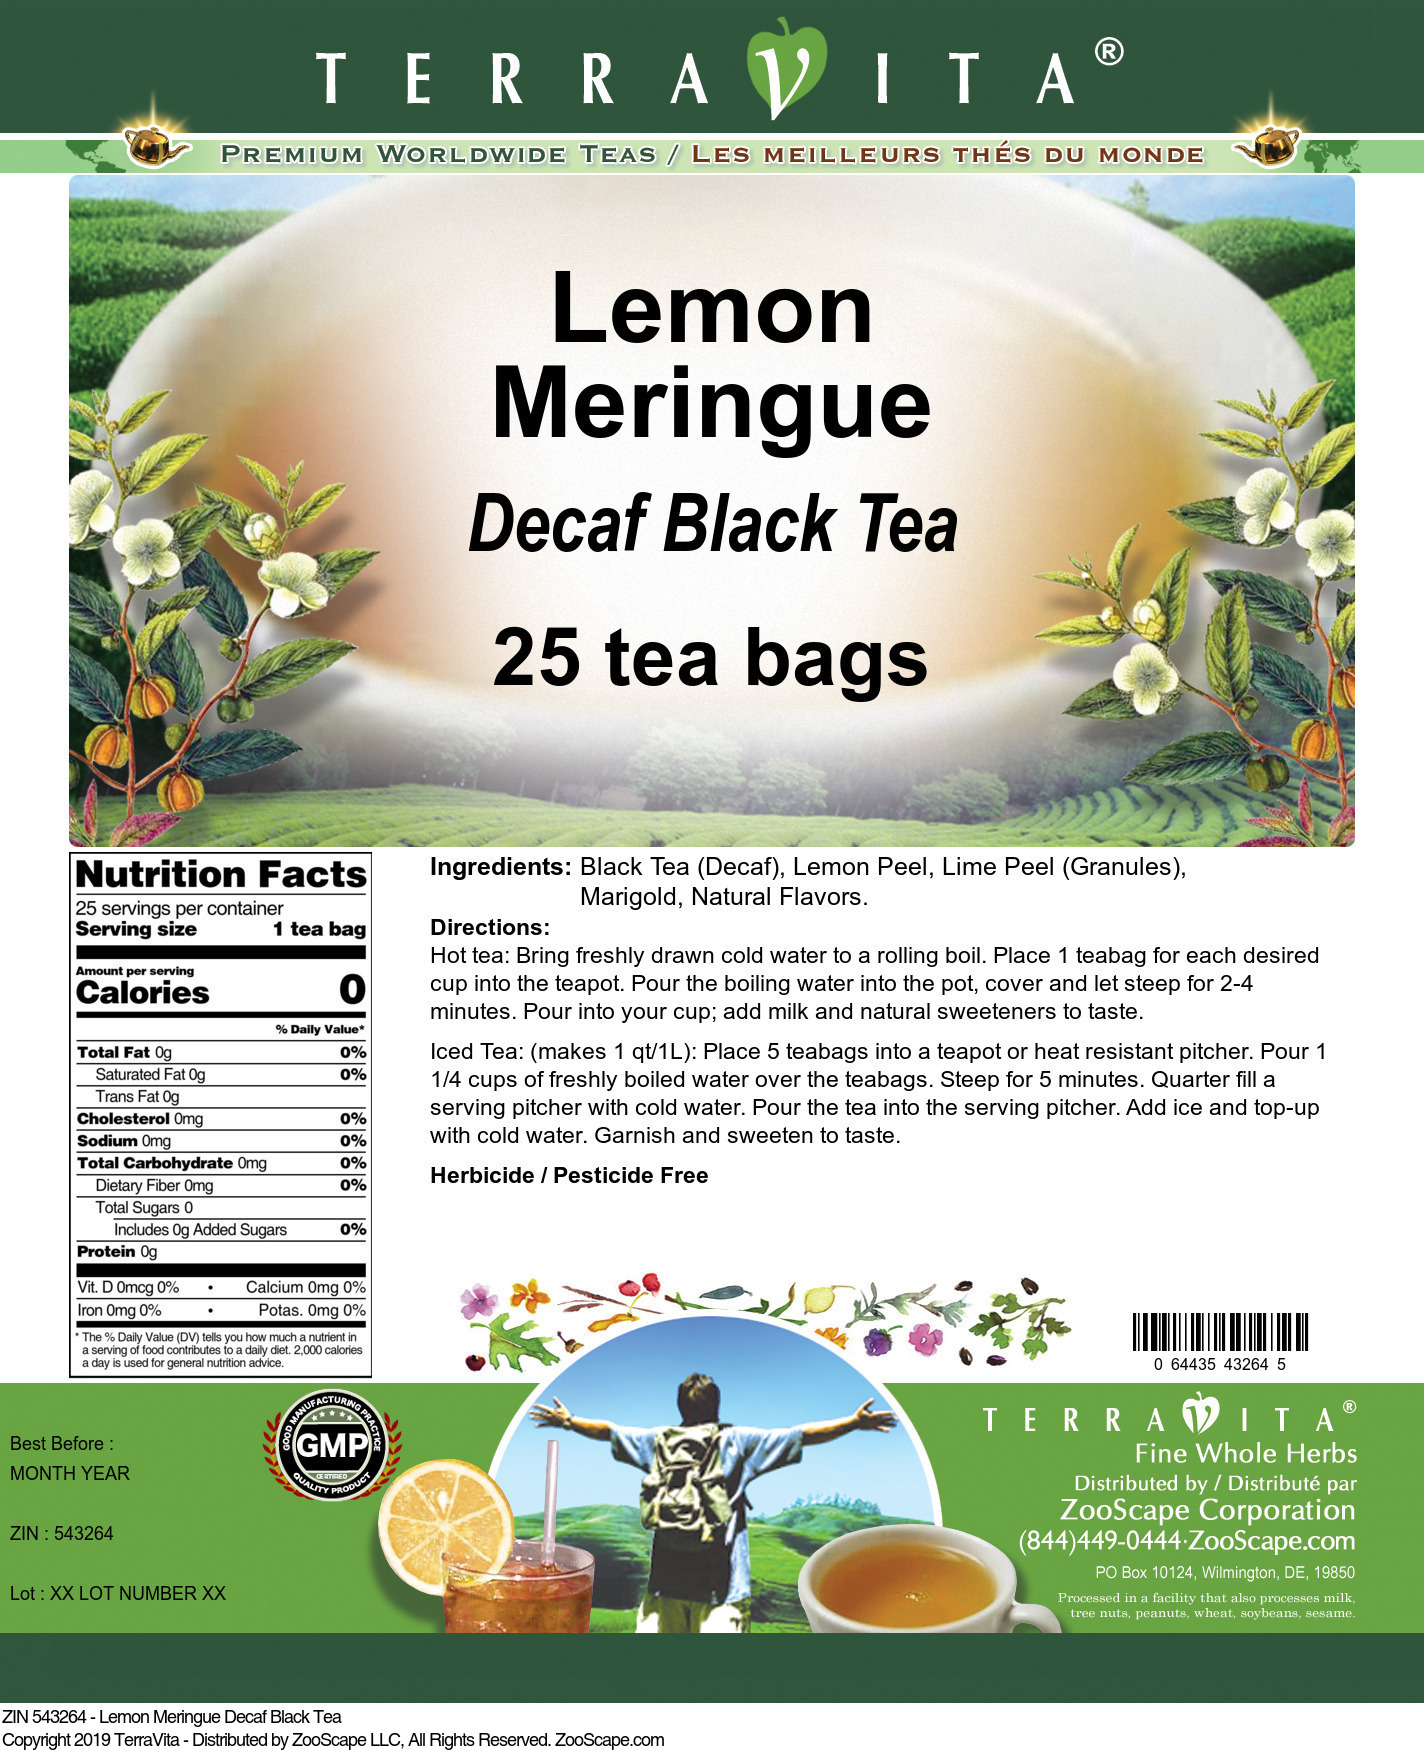 Lemon Meringue Decaf Black Tea - Label